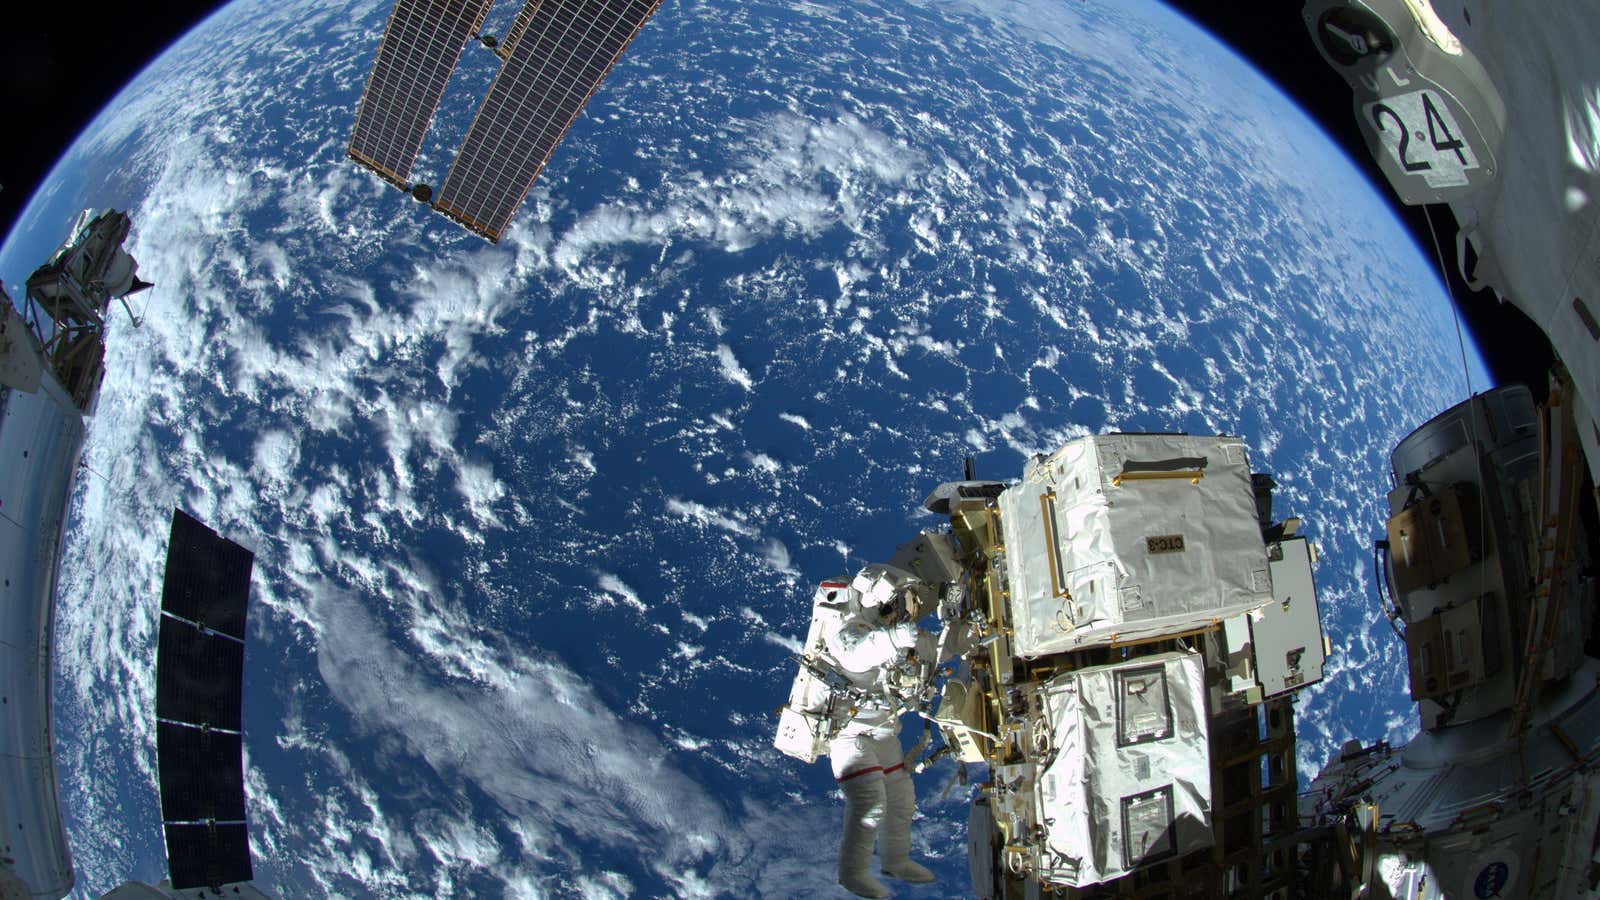 NASA astronaut Reid Wiseman during a similar spacewalk in 2014.